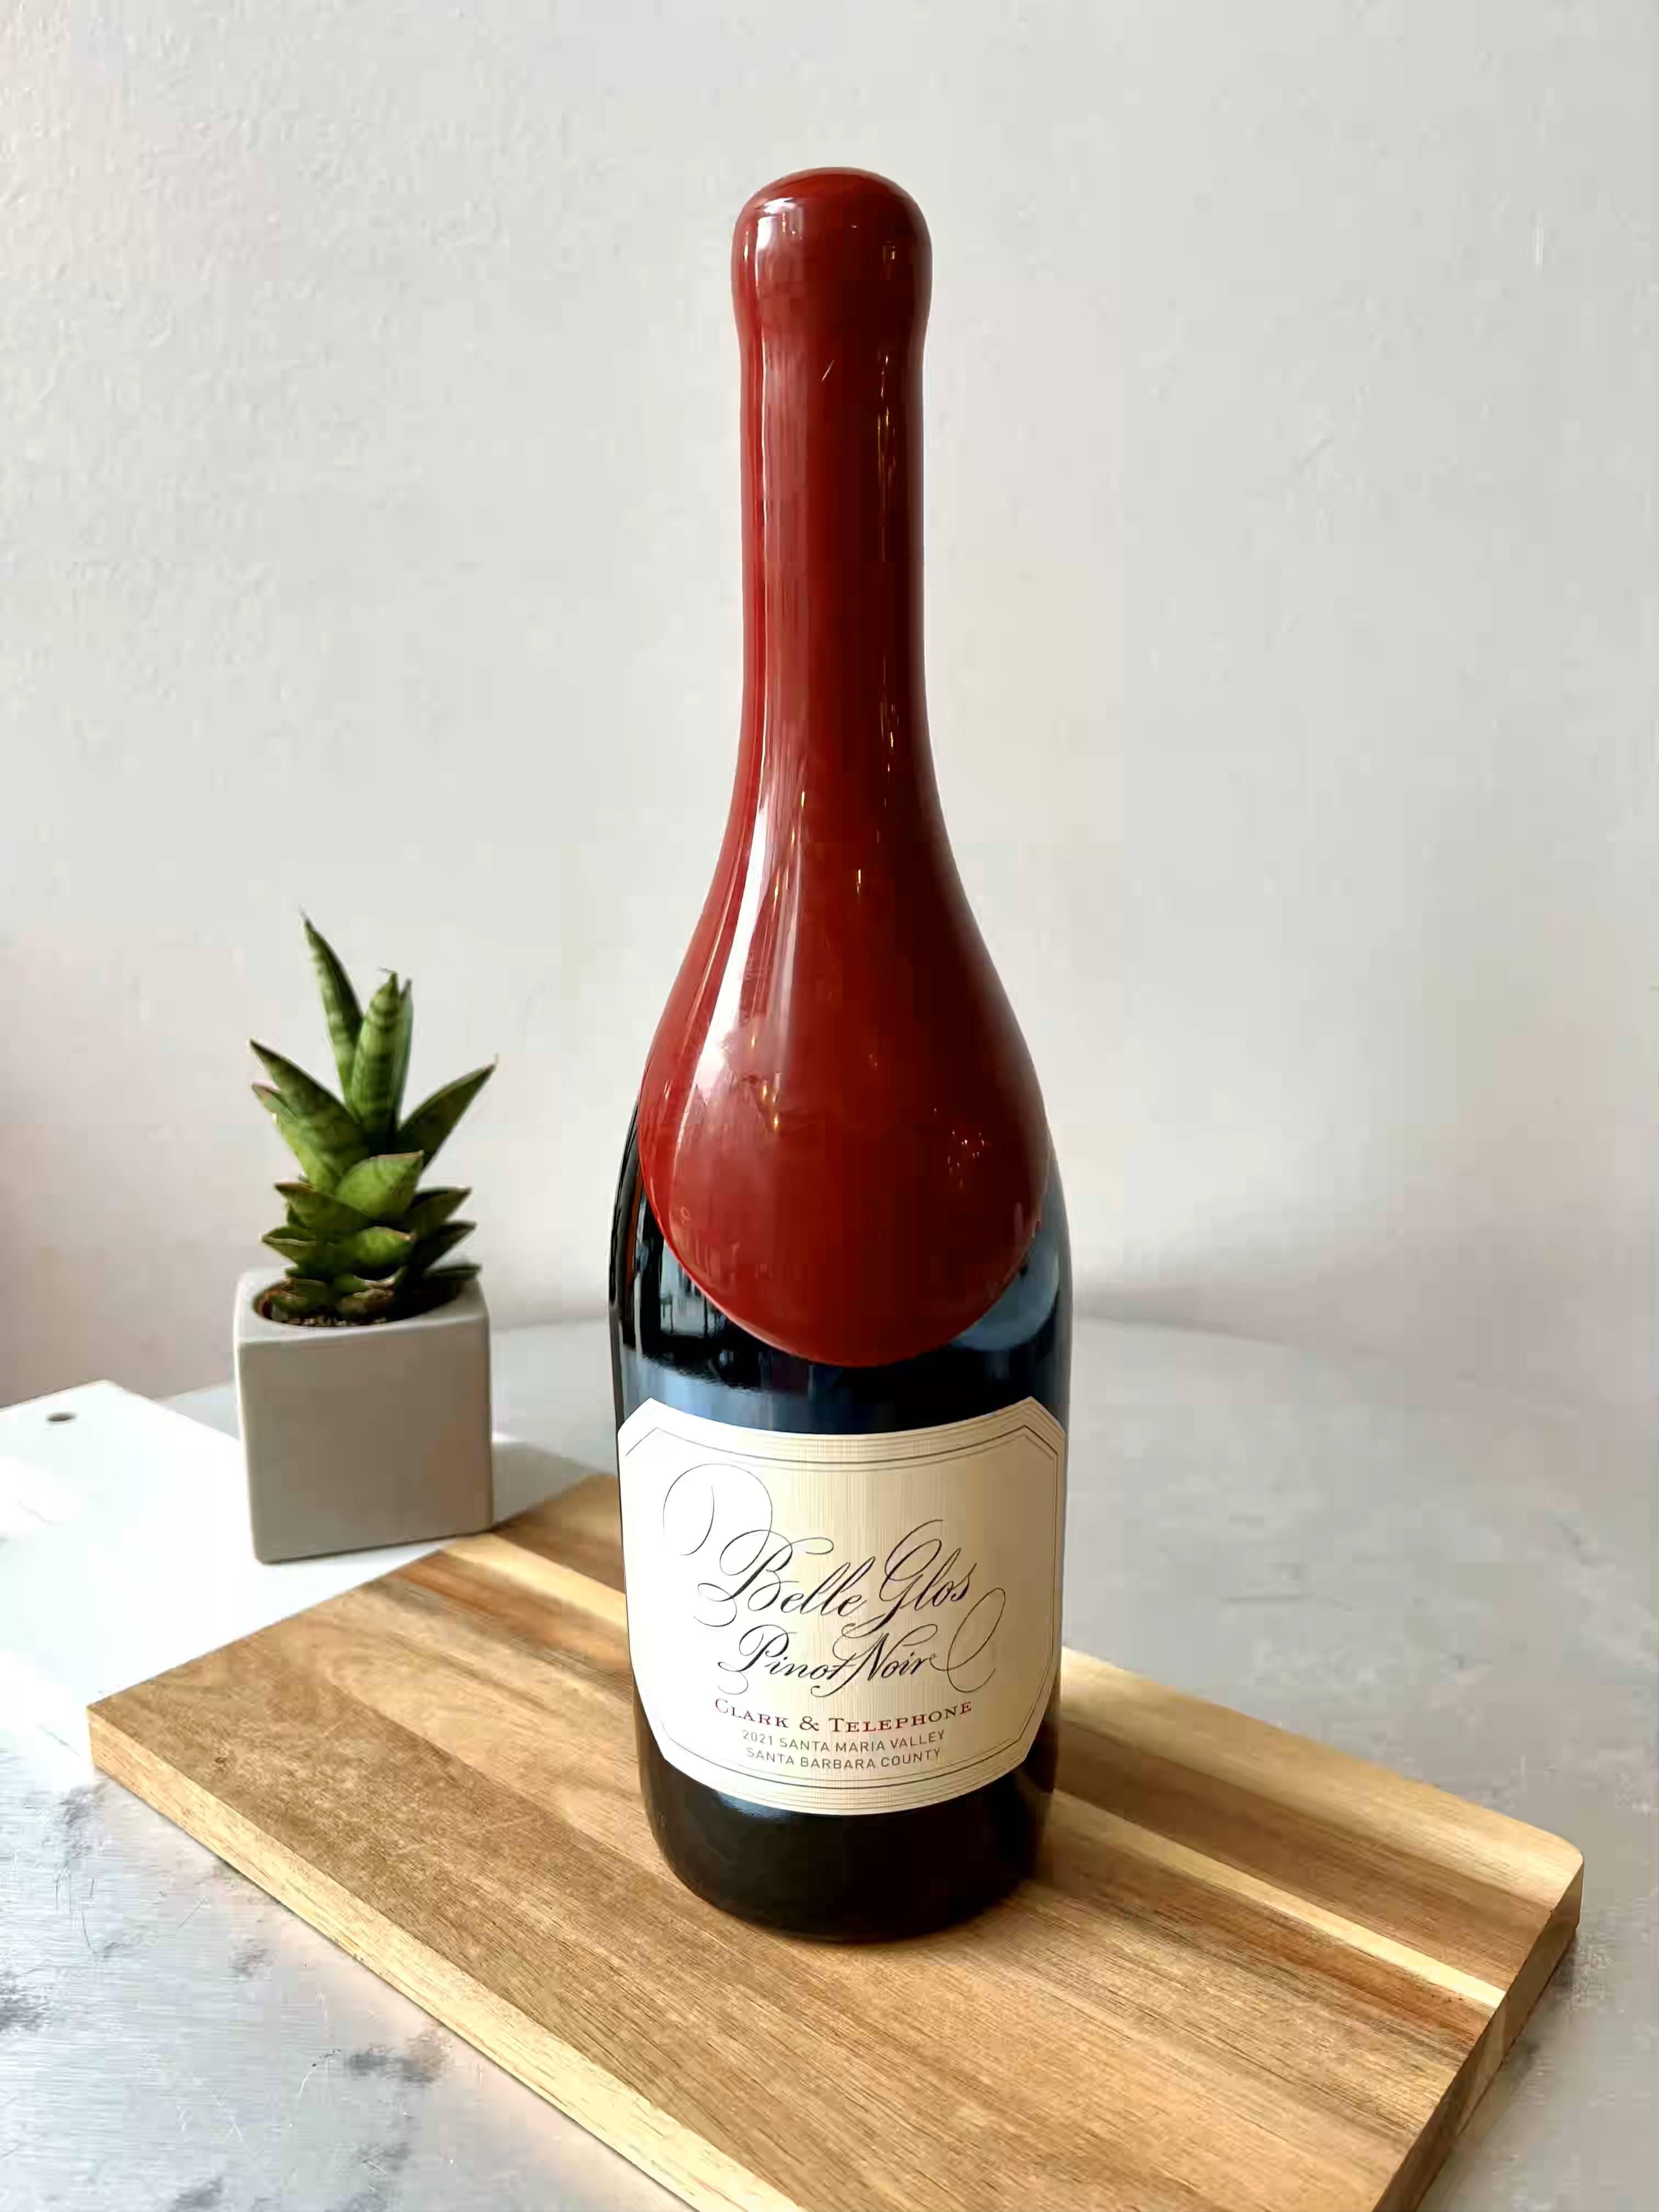 Belle Glos Wines "Clark & Telephone" Pinot Noir 2021 Santa Barbara County